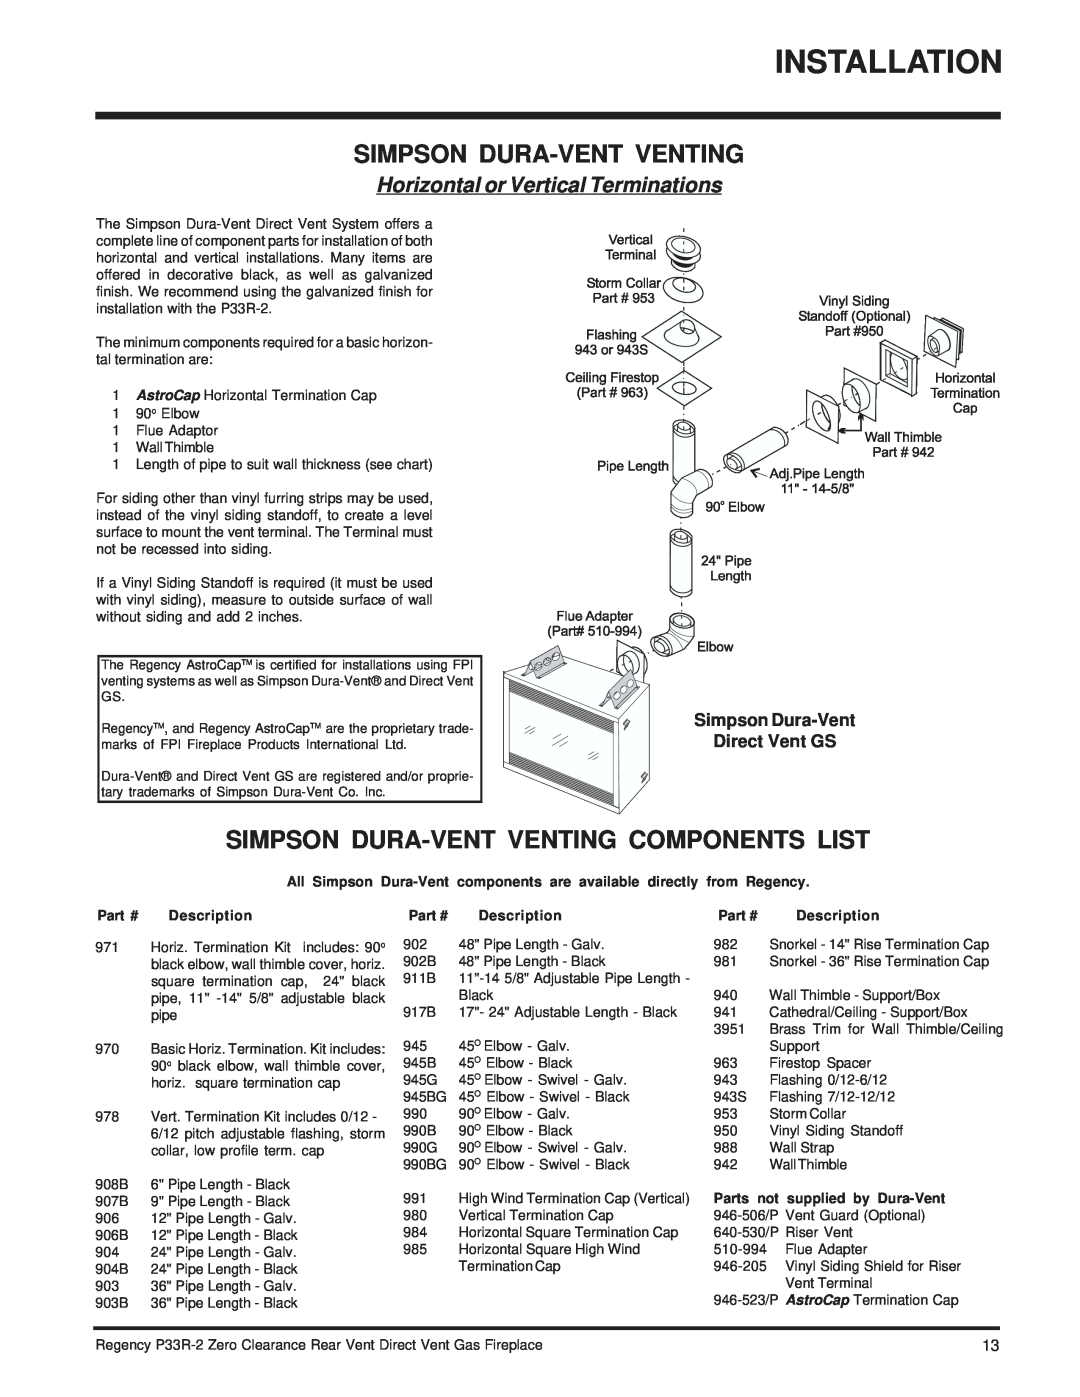 Regency P33R-NG2, P33R-LP2 Simpson Dura-Ventventing Components List, Horizontal or Vertical Terminations 